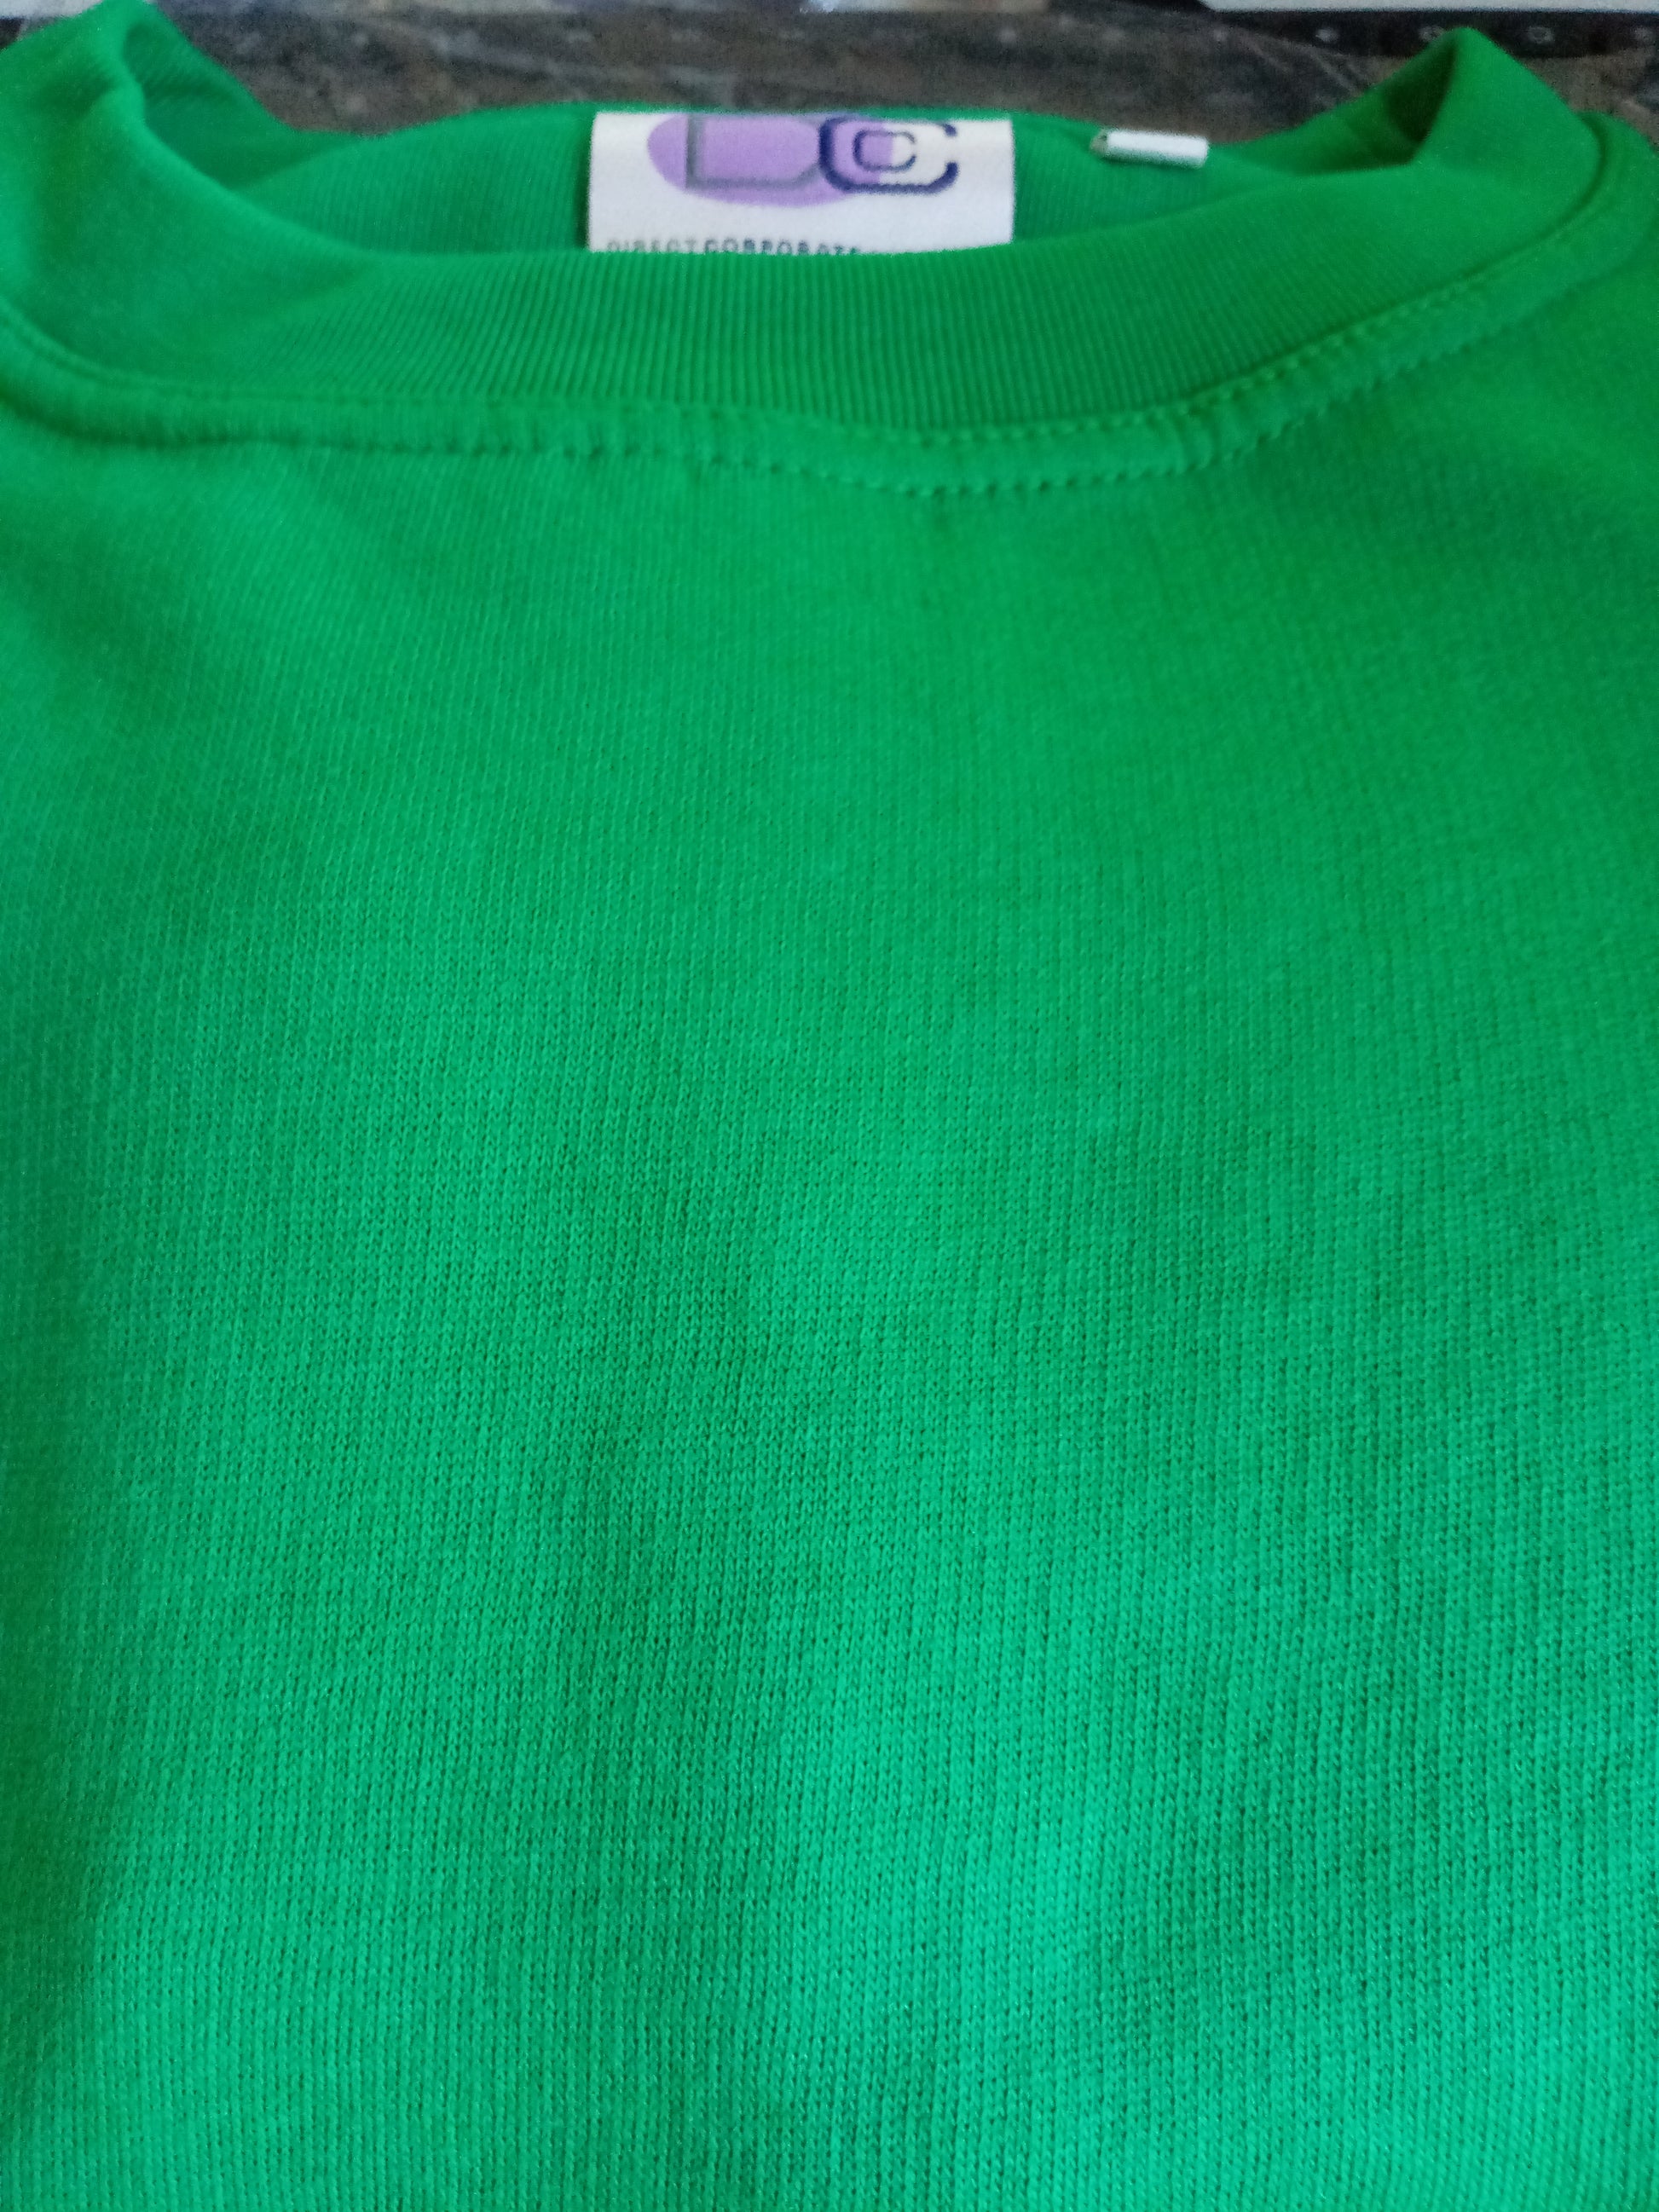 Direct Corporate Clothing Sweatshirt XL - SWS280